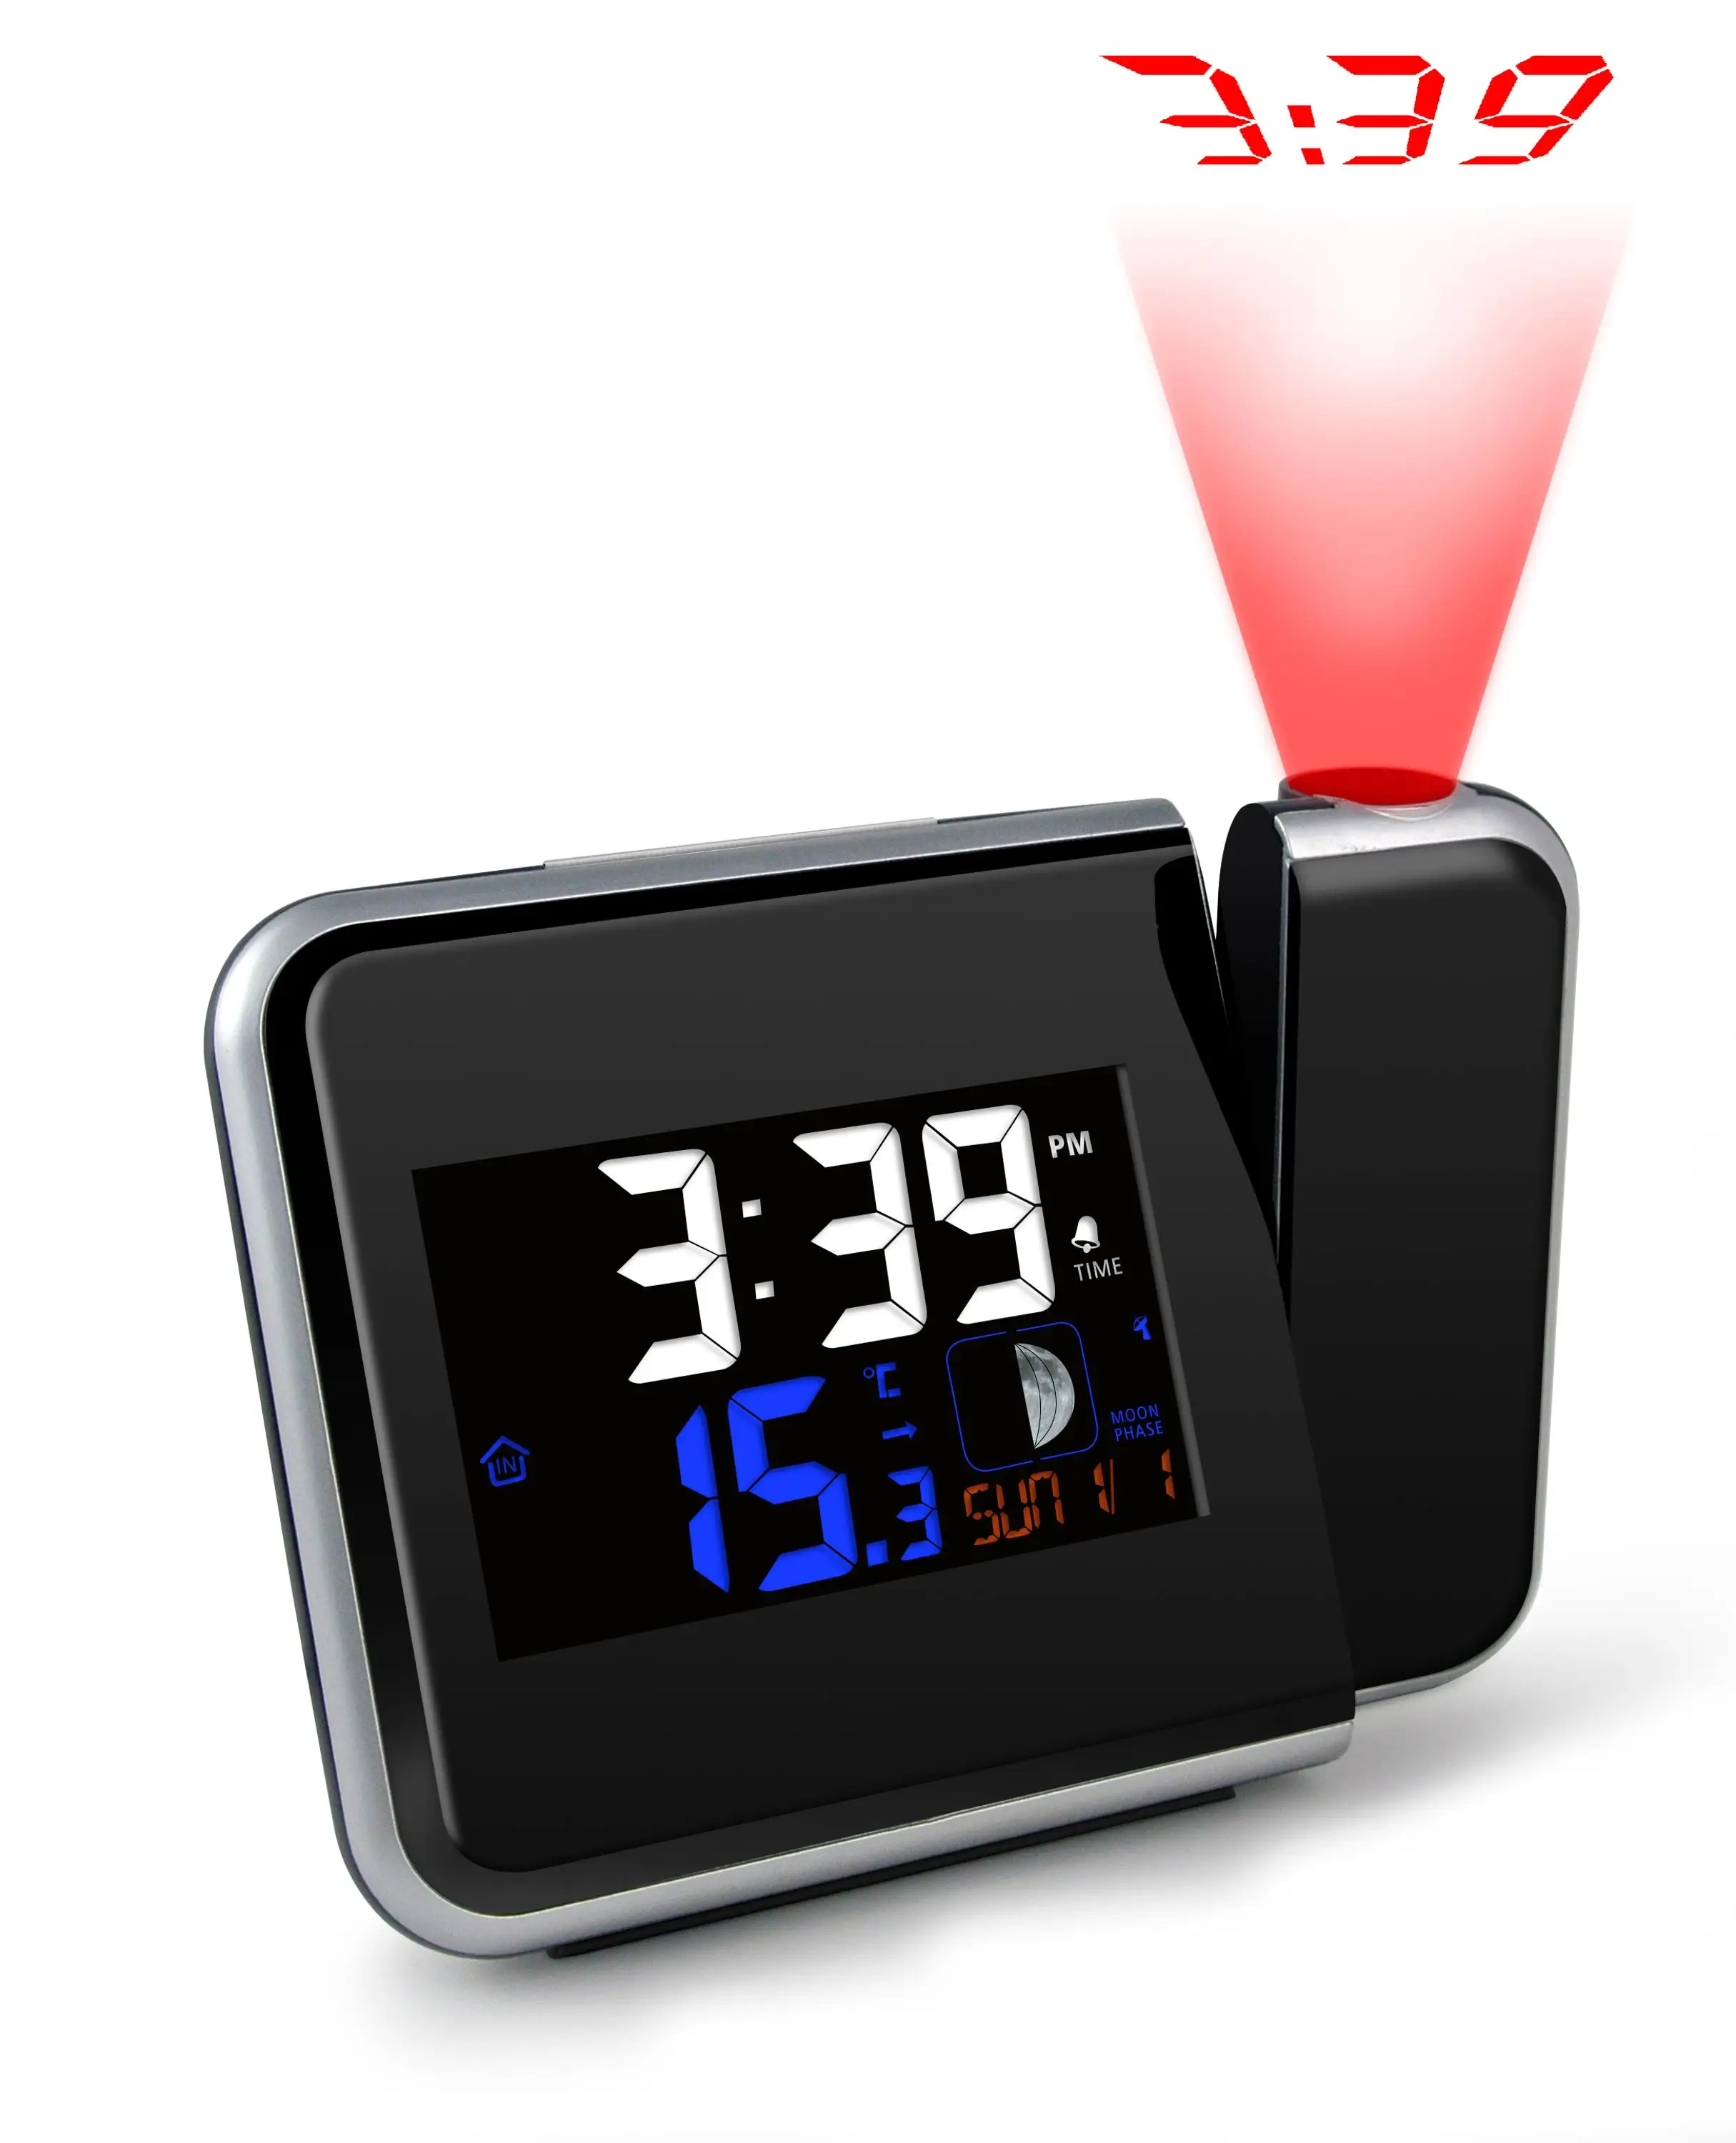 Projector alarm digital RADIO CONTROLLED clock